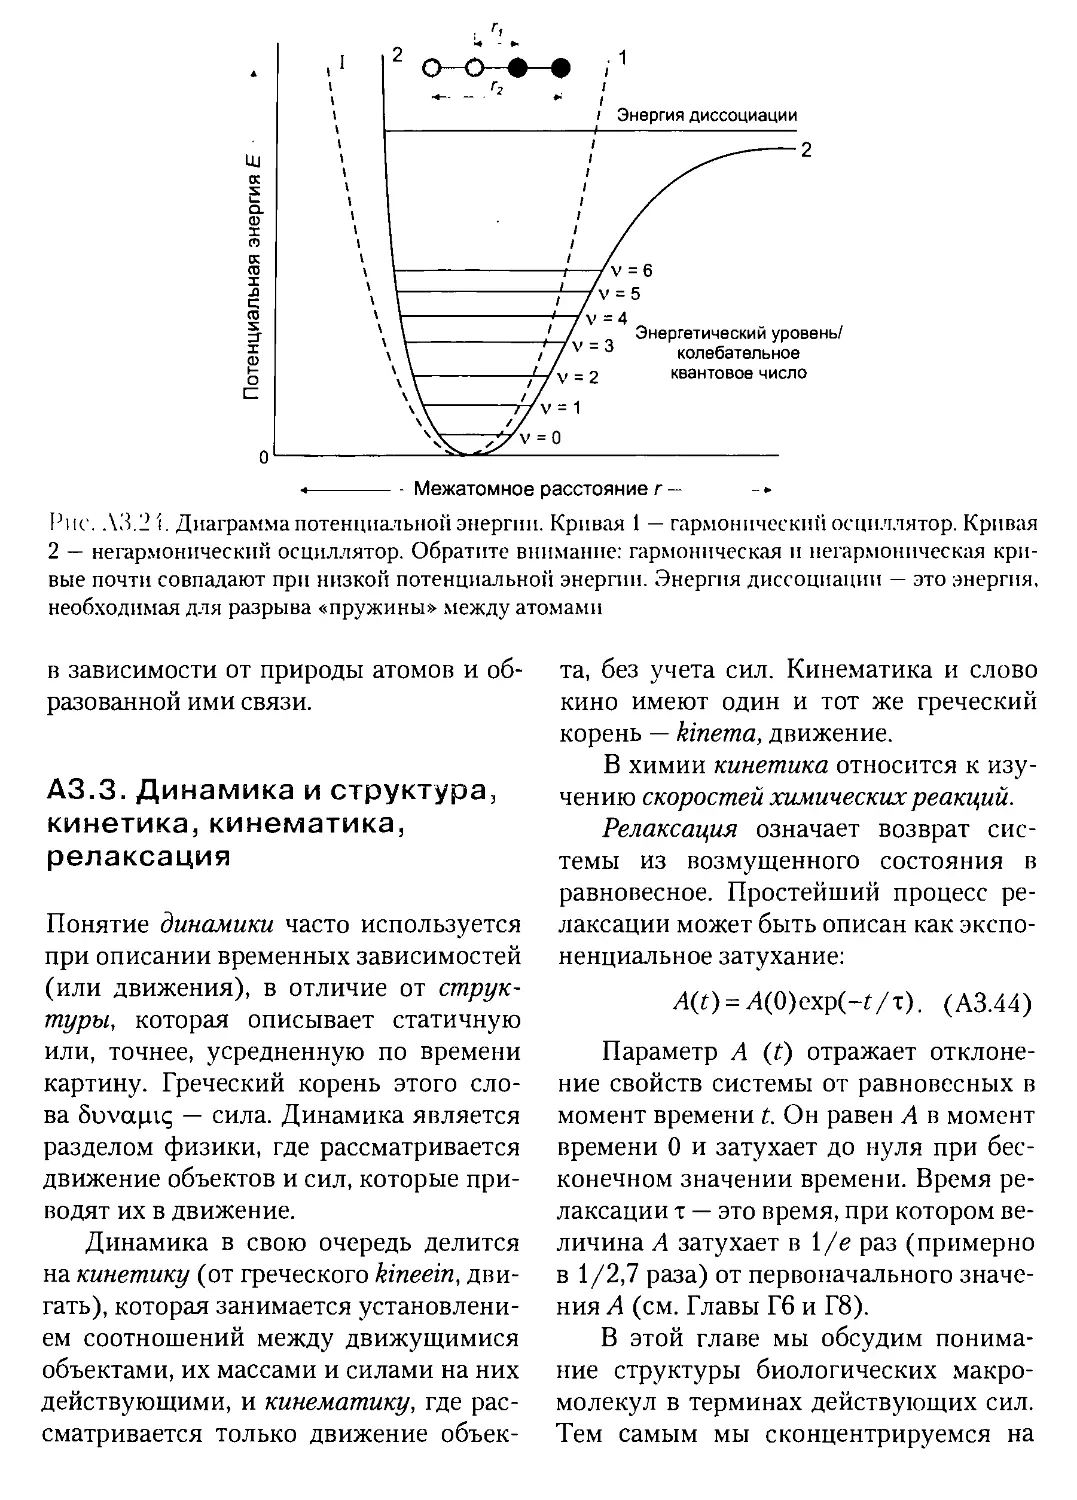 А3.3. Динамика и структура, кинетика, кинематика, релаксация